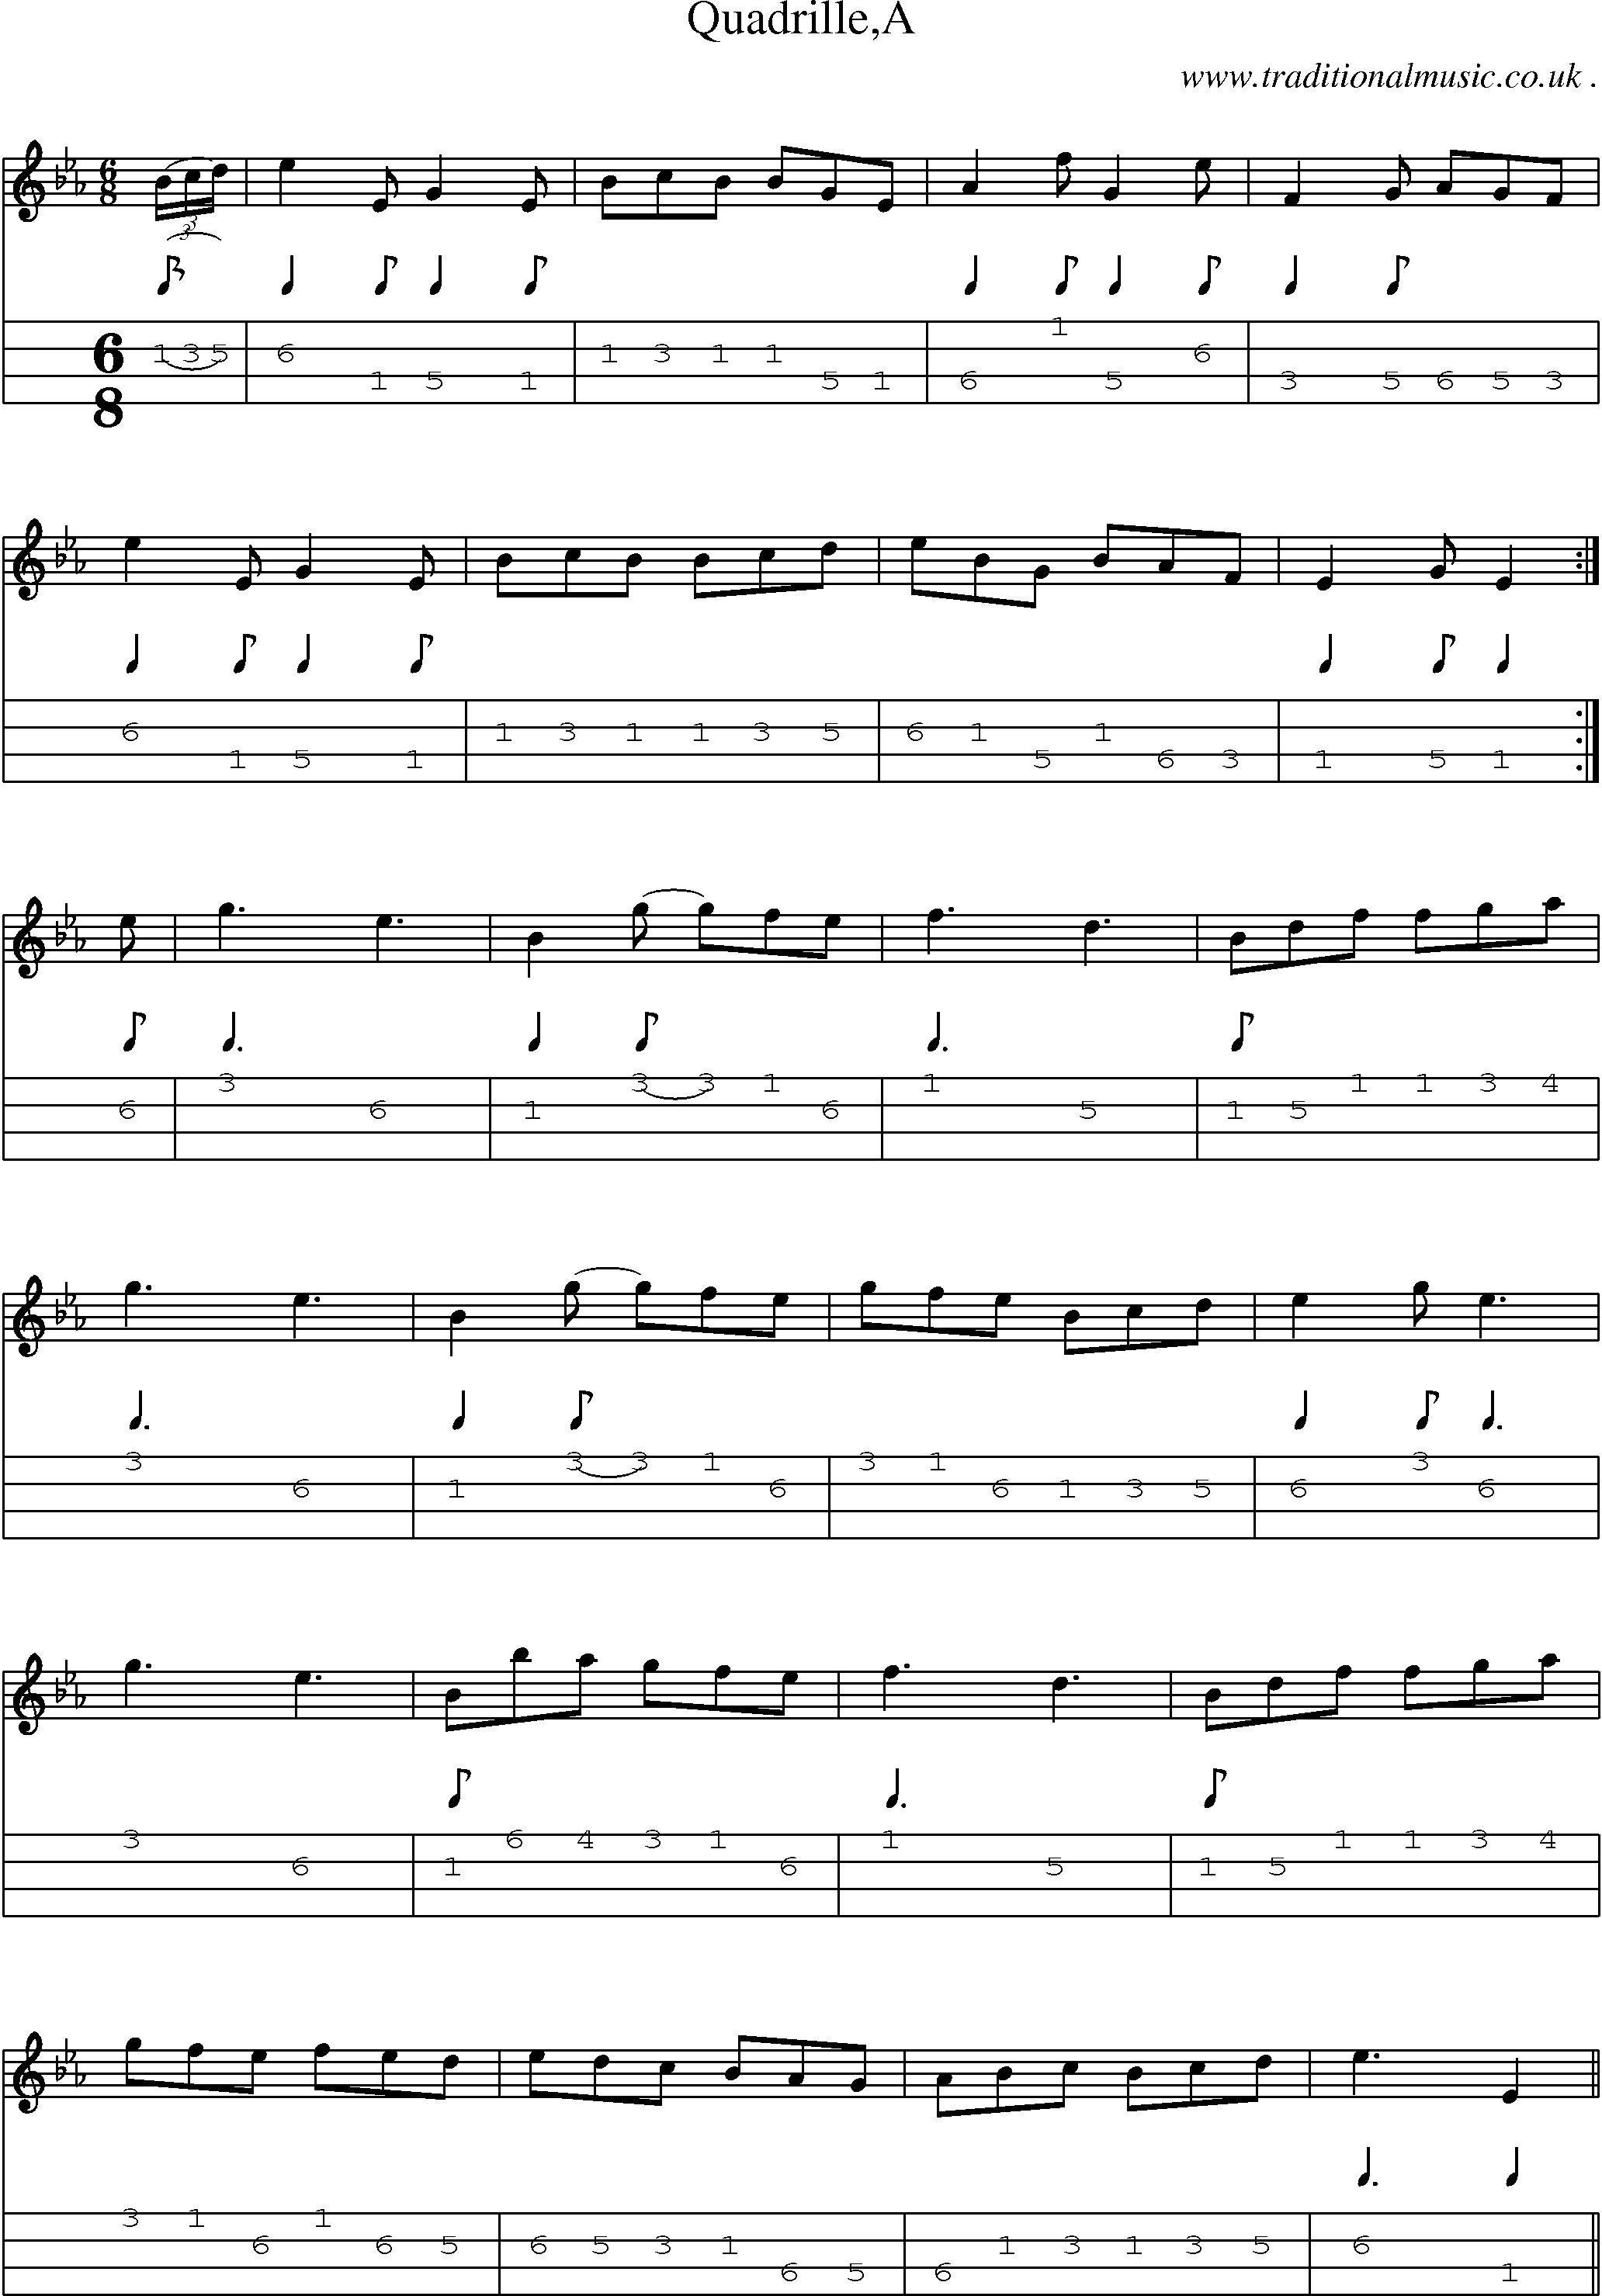 Sheet-Music and Mandolin Tabs for Quadrillea